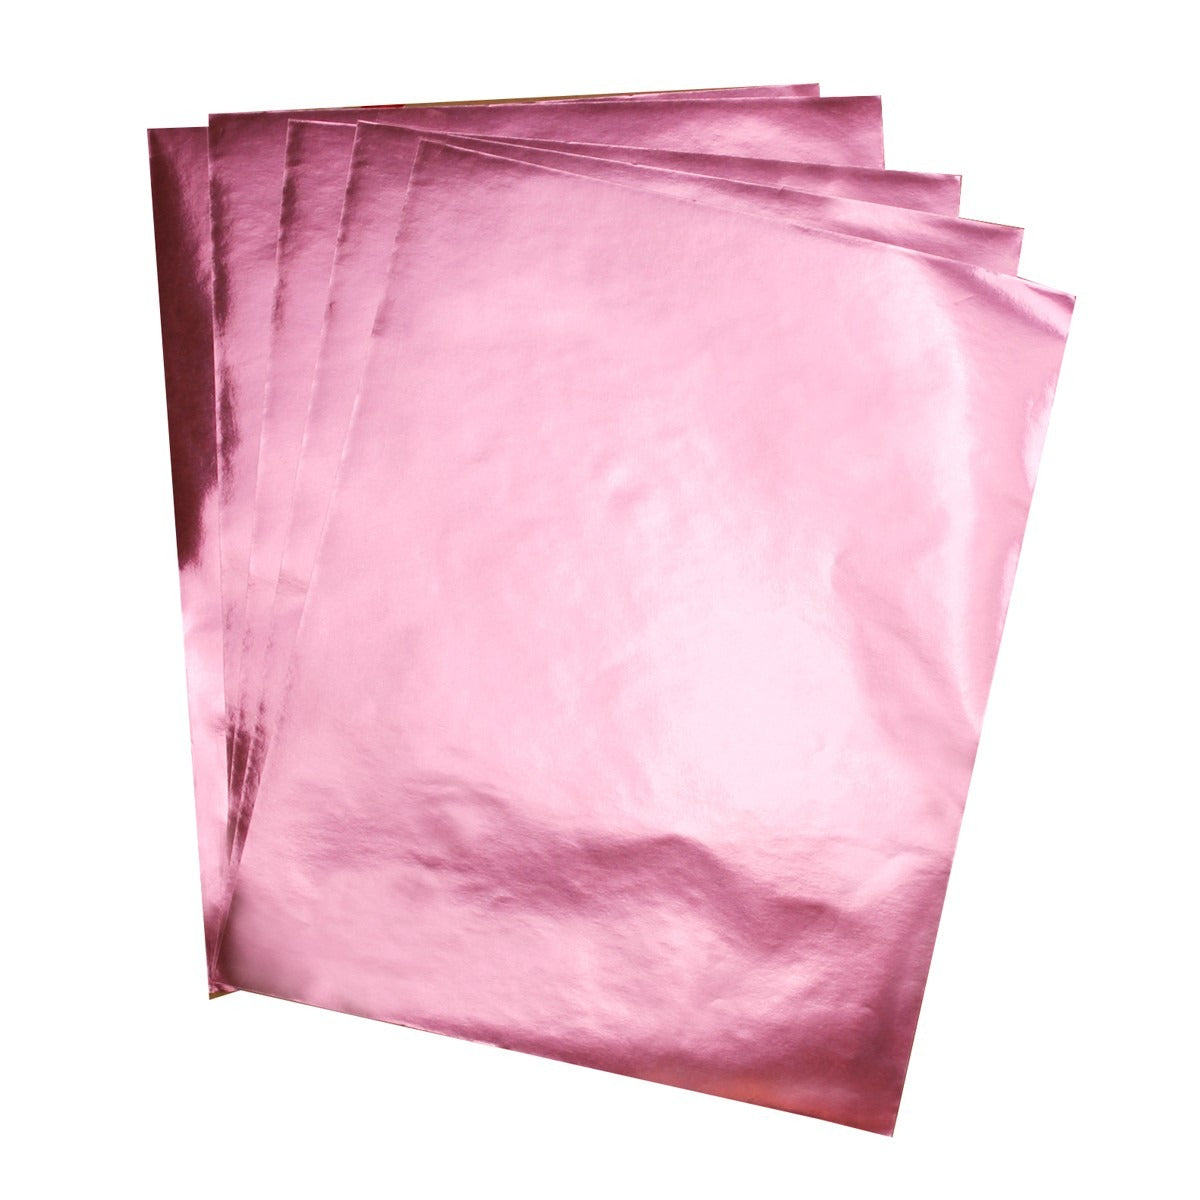 20 Sheets of Metal Foil Leaf Sheets Lavender Blush Pink Silver and